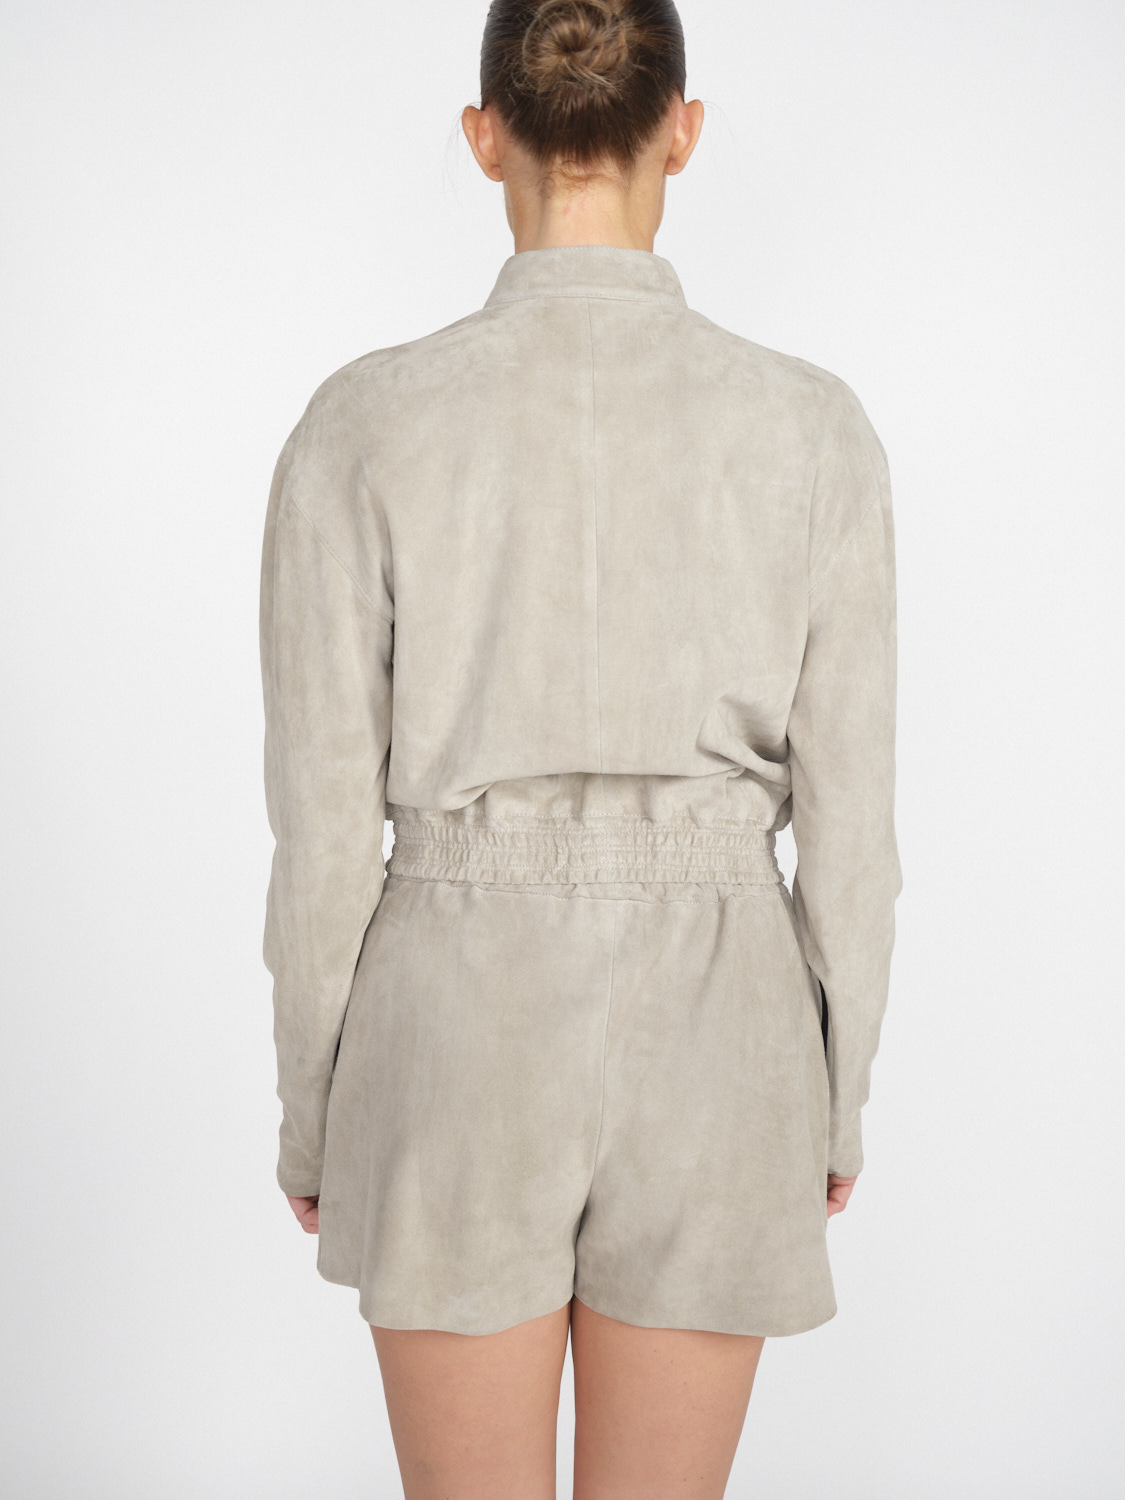 jitrois Blof – Stretchige Veloursleder-Jacke mit schwarzen Zippern  beige 36